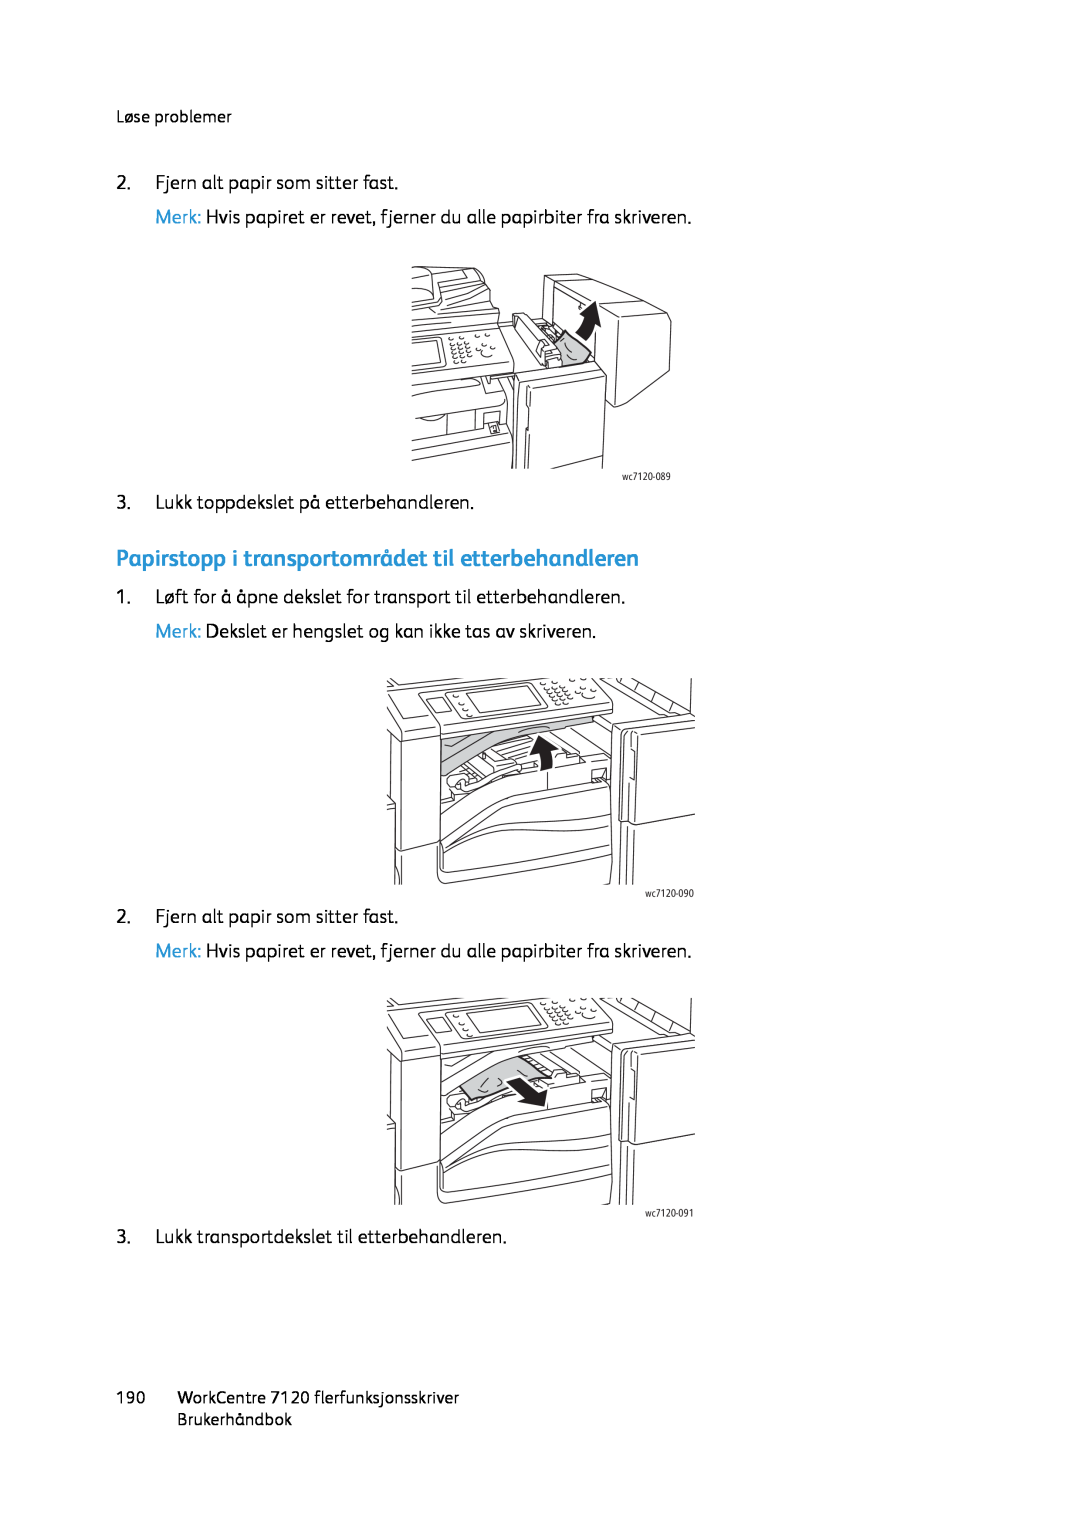 Xerox manual Papirstopp i transportområdet til etterbehandleren, wc7120-089, wc7120-090, wc7120-091 